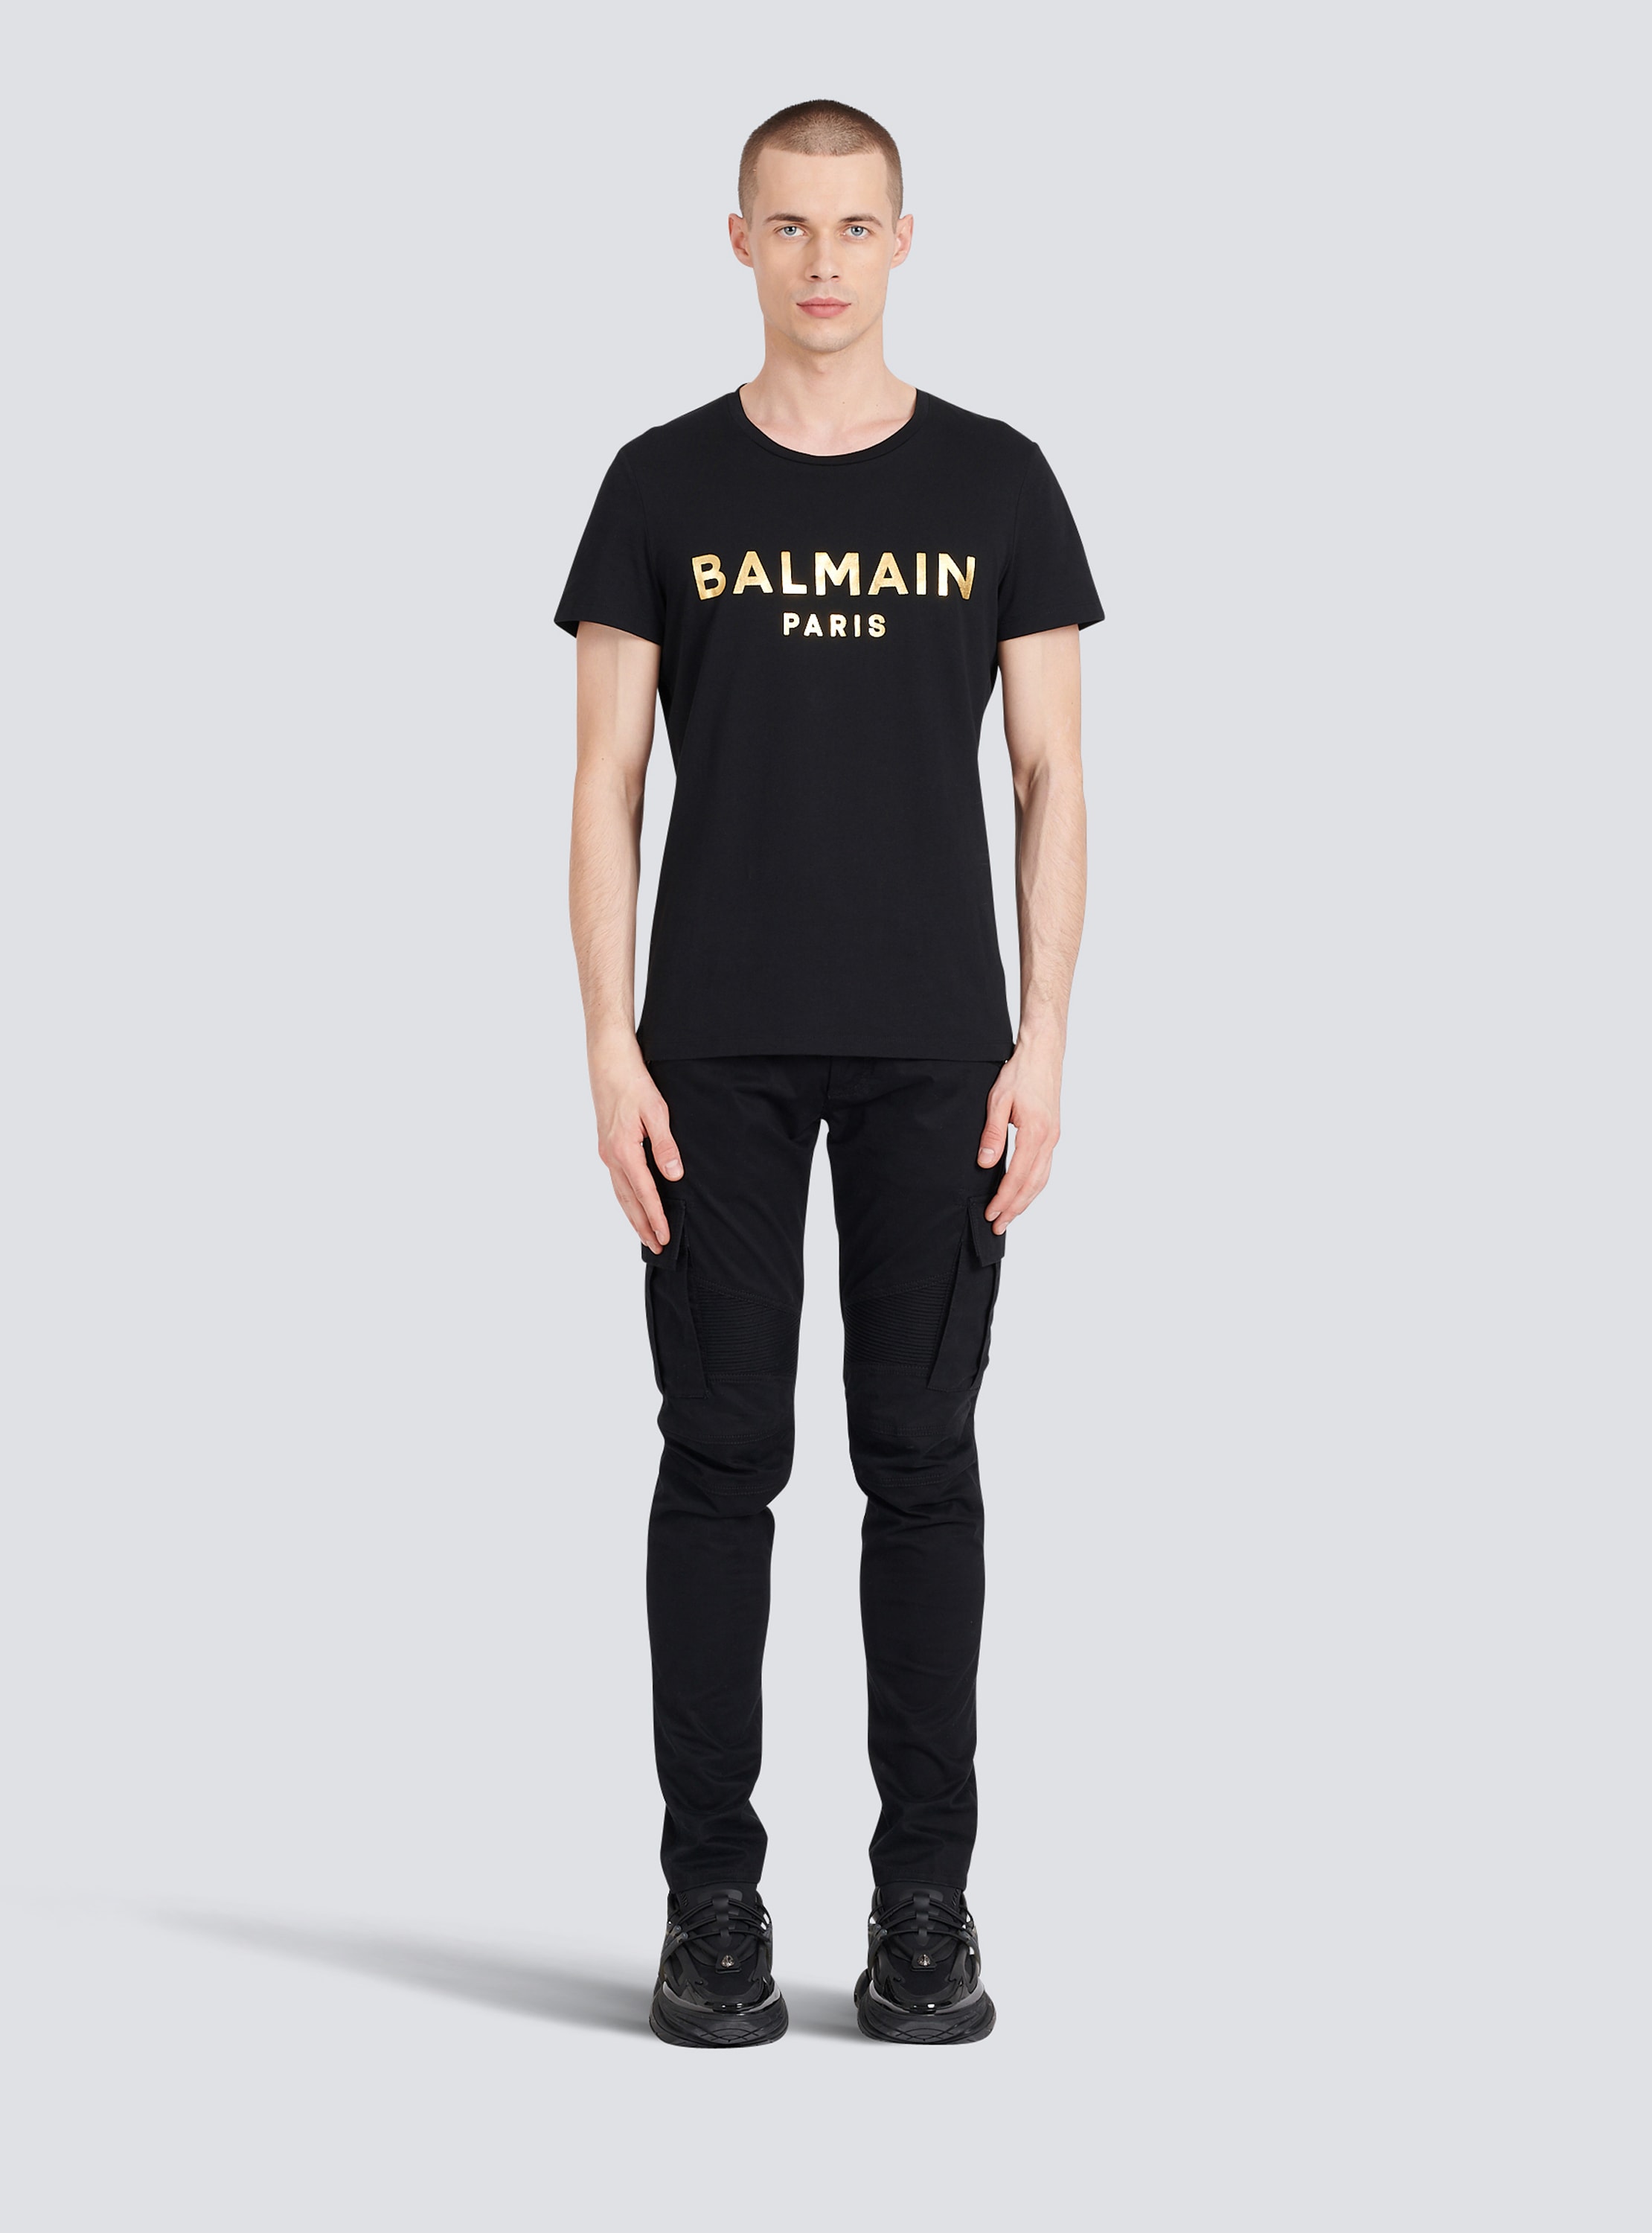 Eco-designed cotton T-shirt with Balmain Paris logo print - Men 